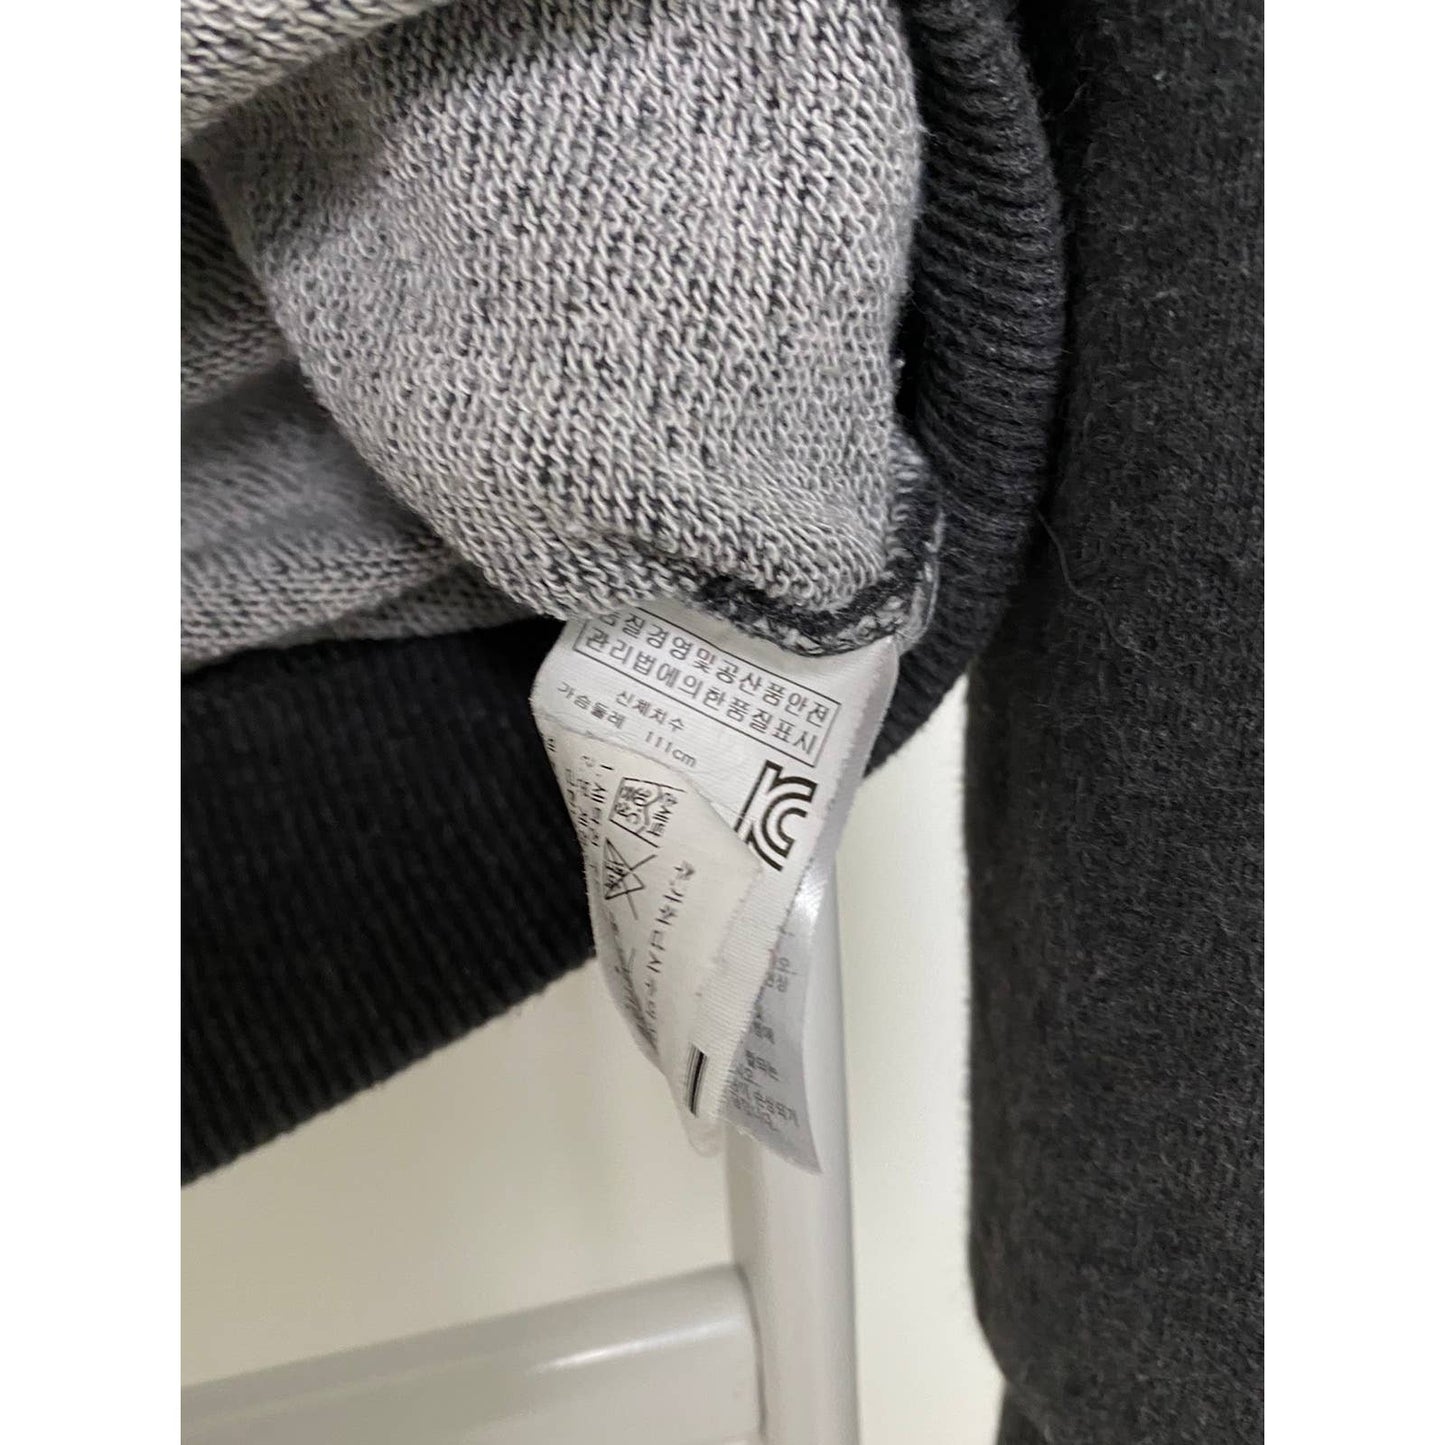 Evisu vintage dark grey sweatshirt Polka dot